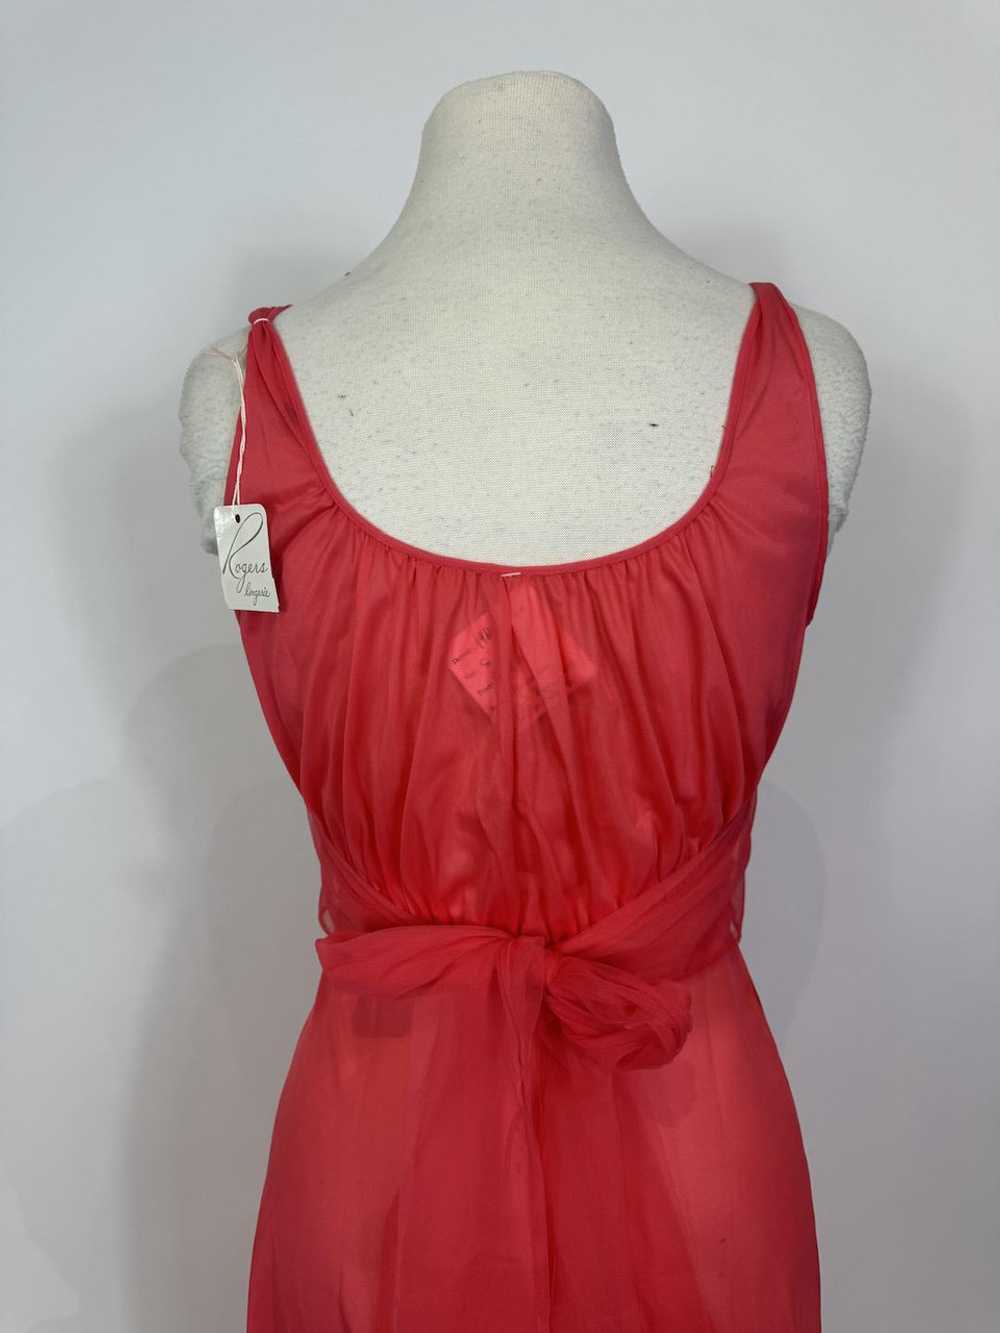 1960s Hot Pink Rogers Chiffon Slip Dress Deadstoc… - image 6